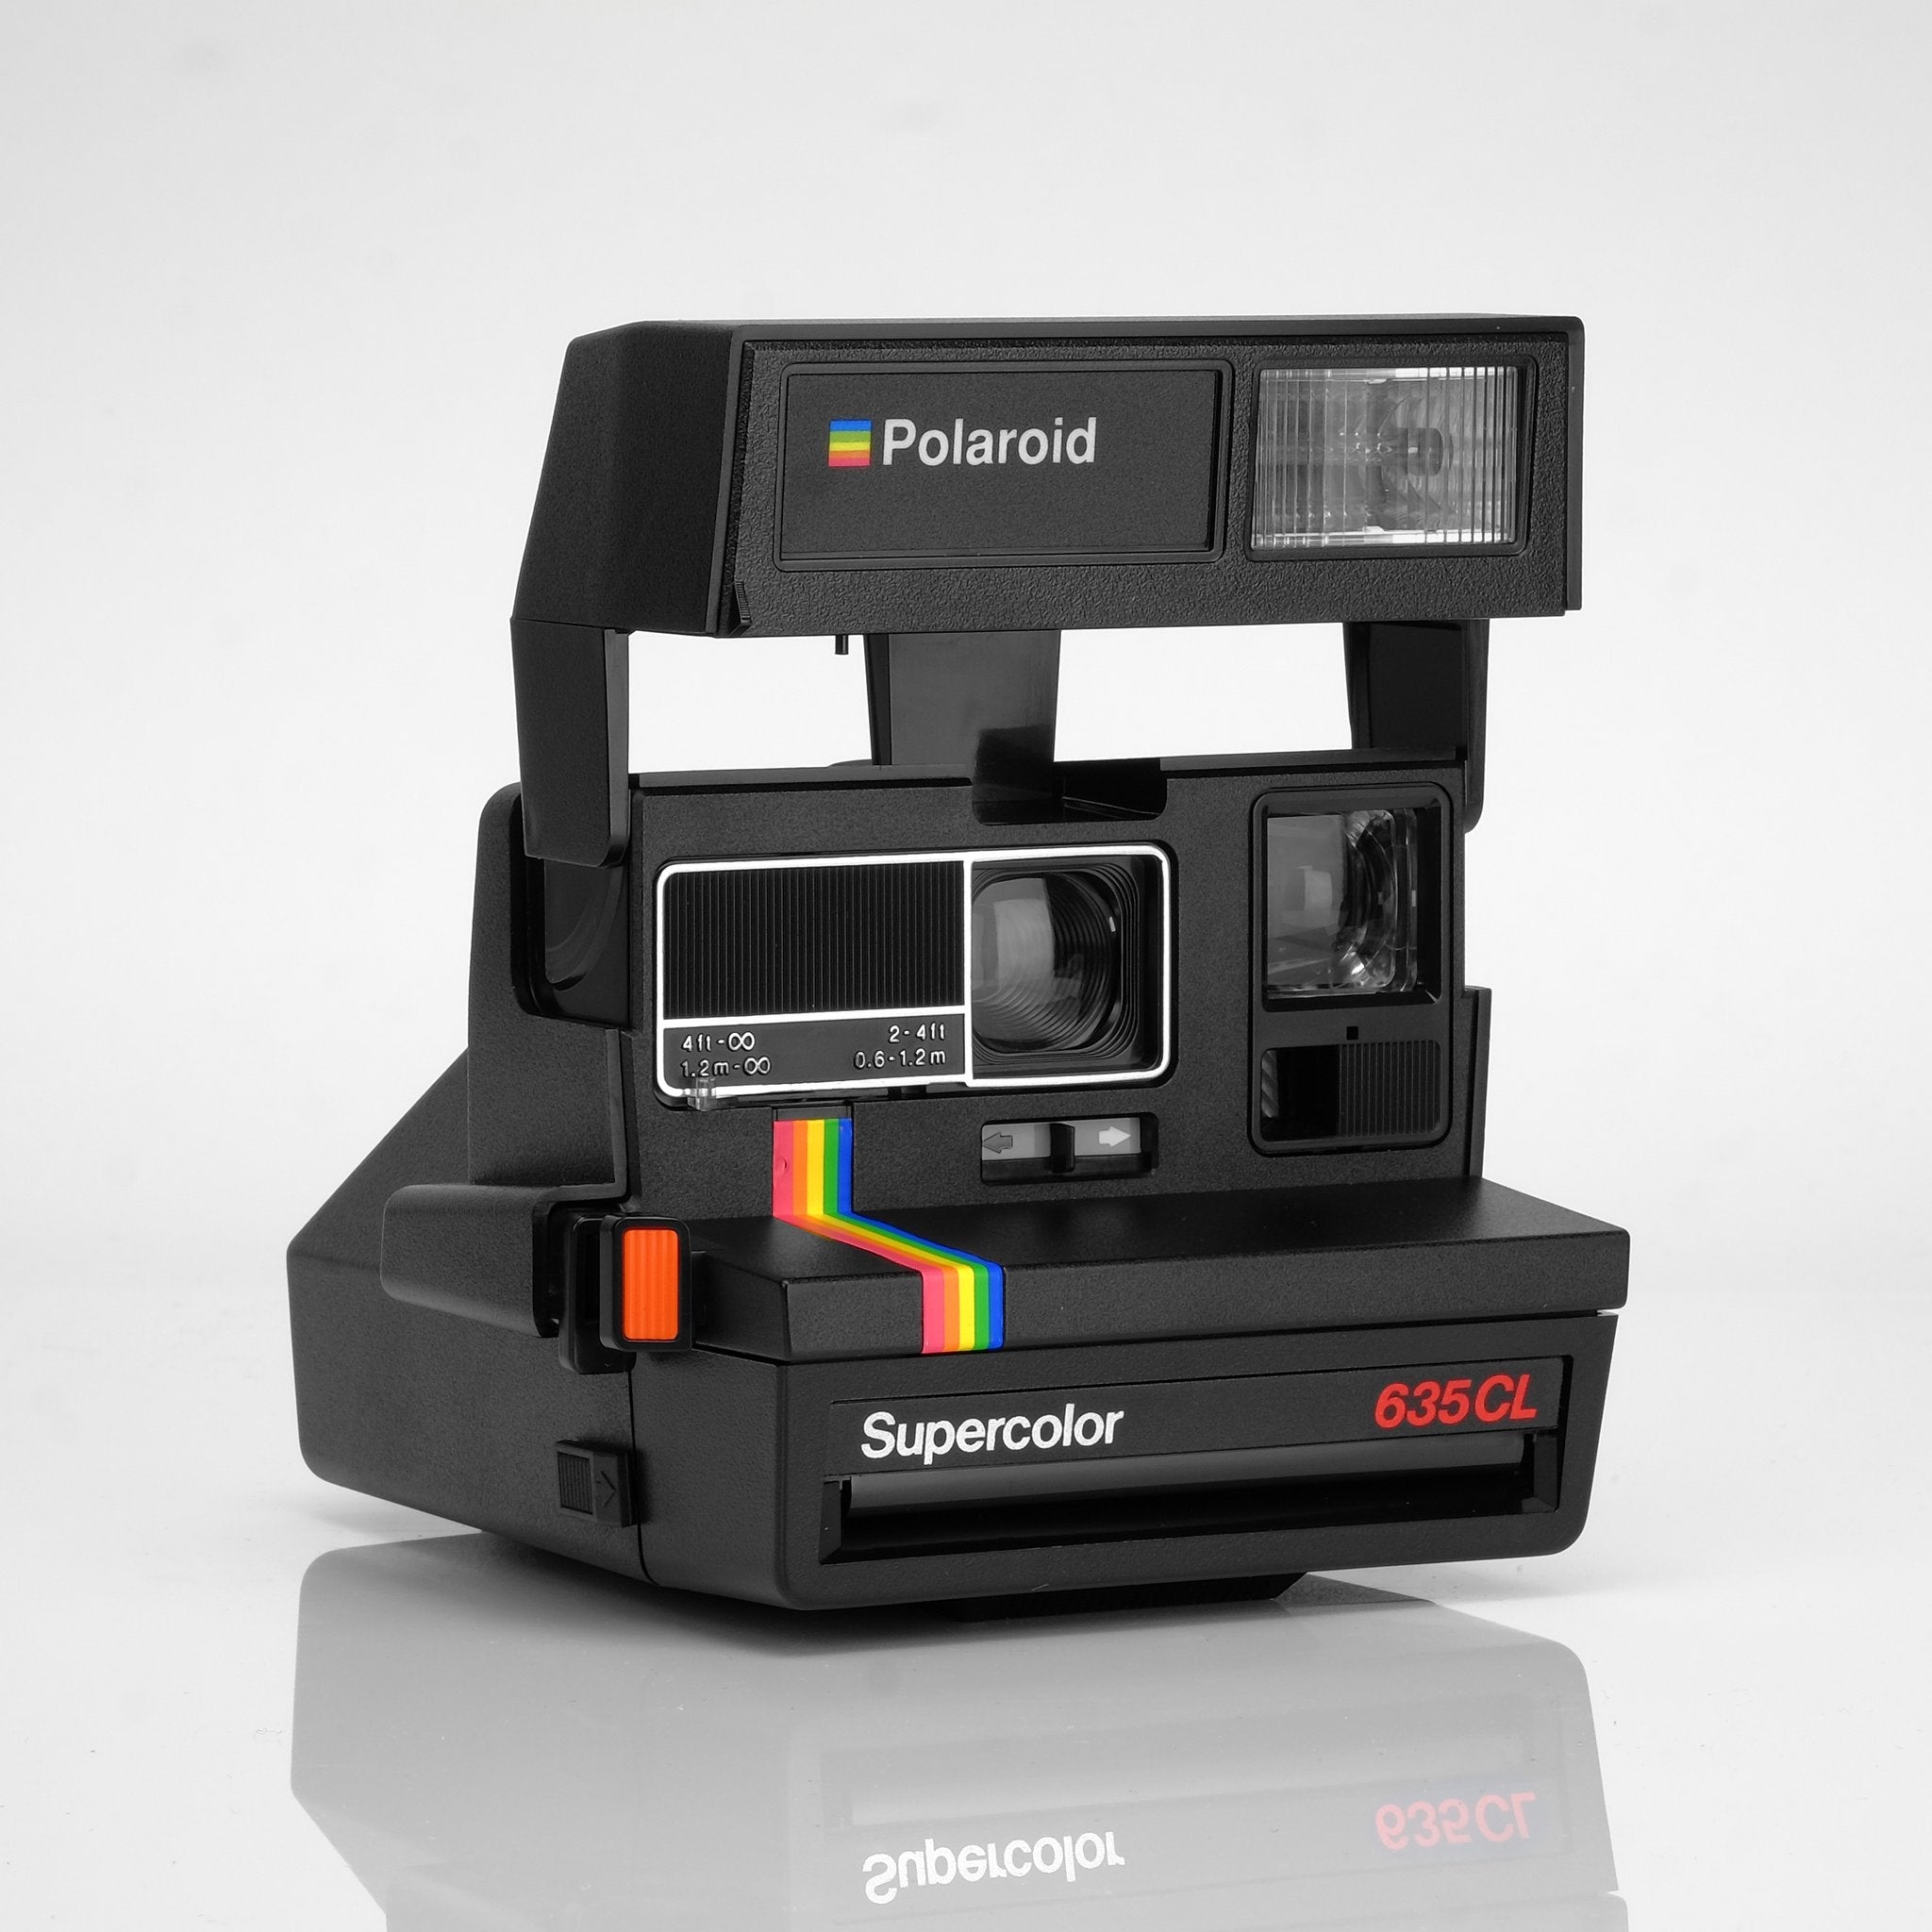 Polaroid Supercolor 635 not working : r/Polaroid